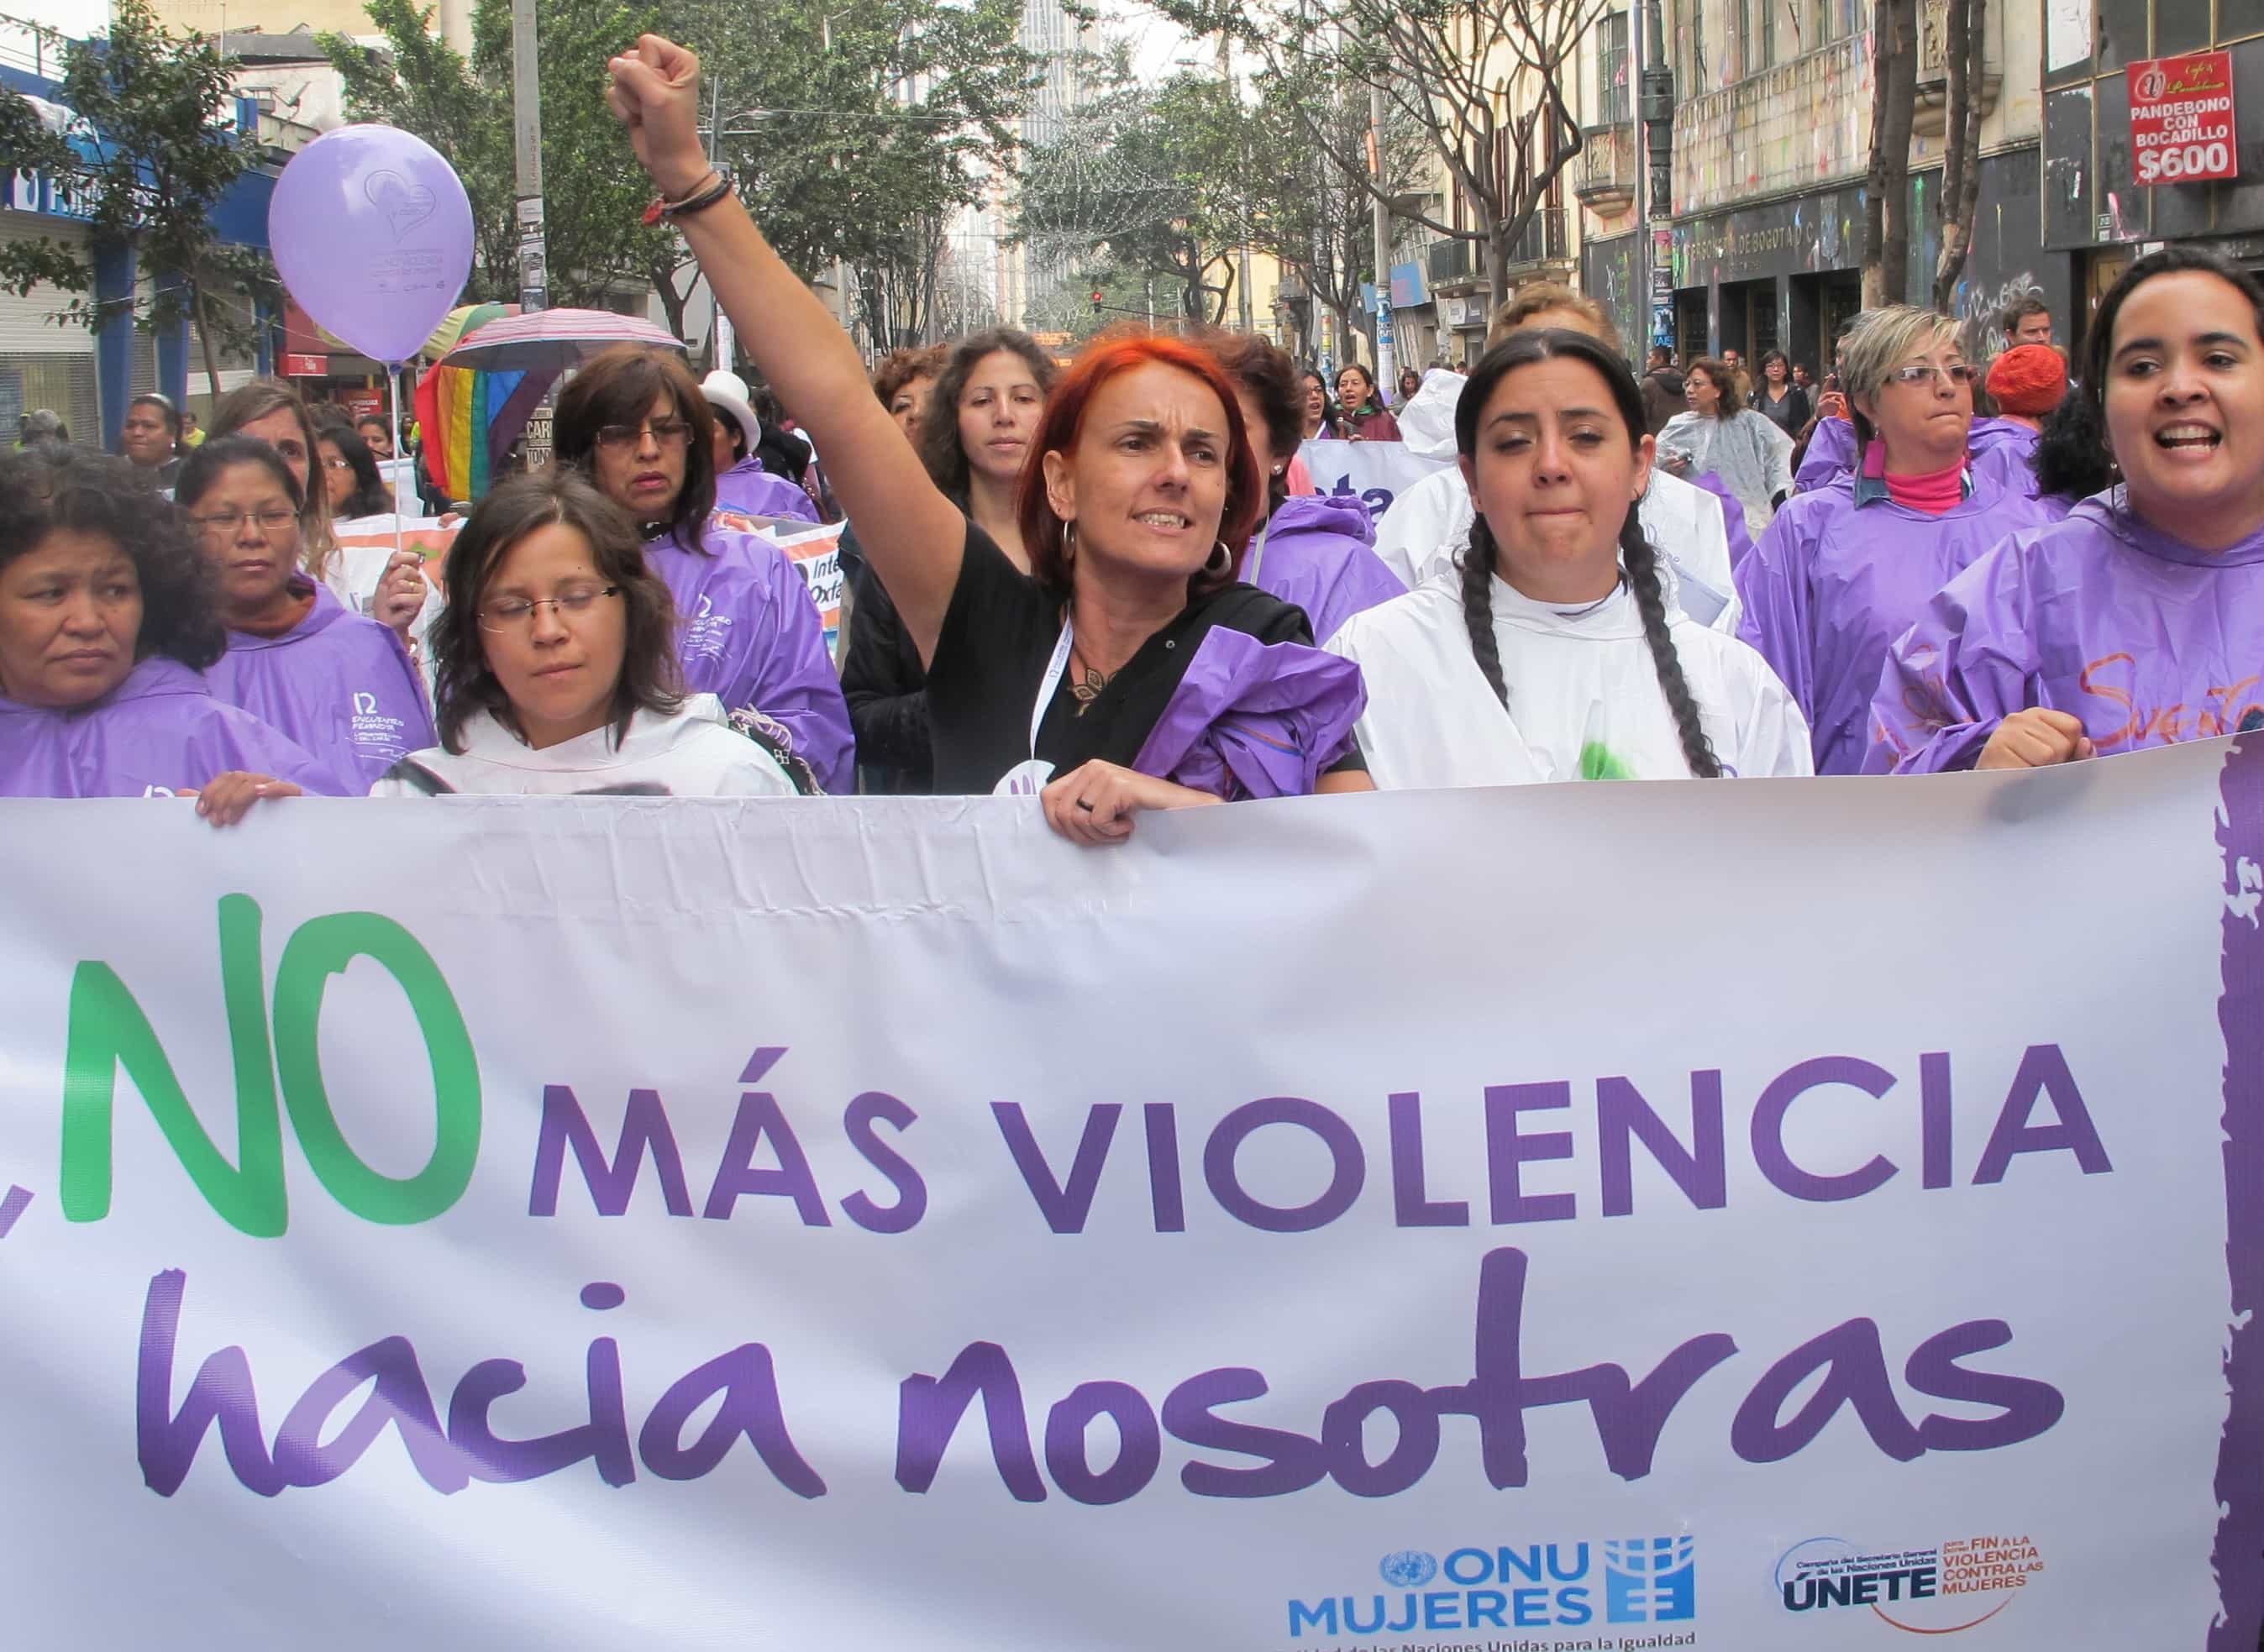 Women march through Bogotá, Colombia to demand an end to violence against women, UN Women via Flickr